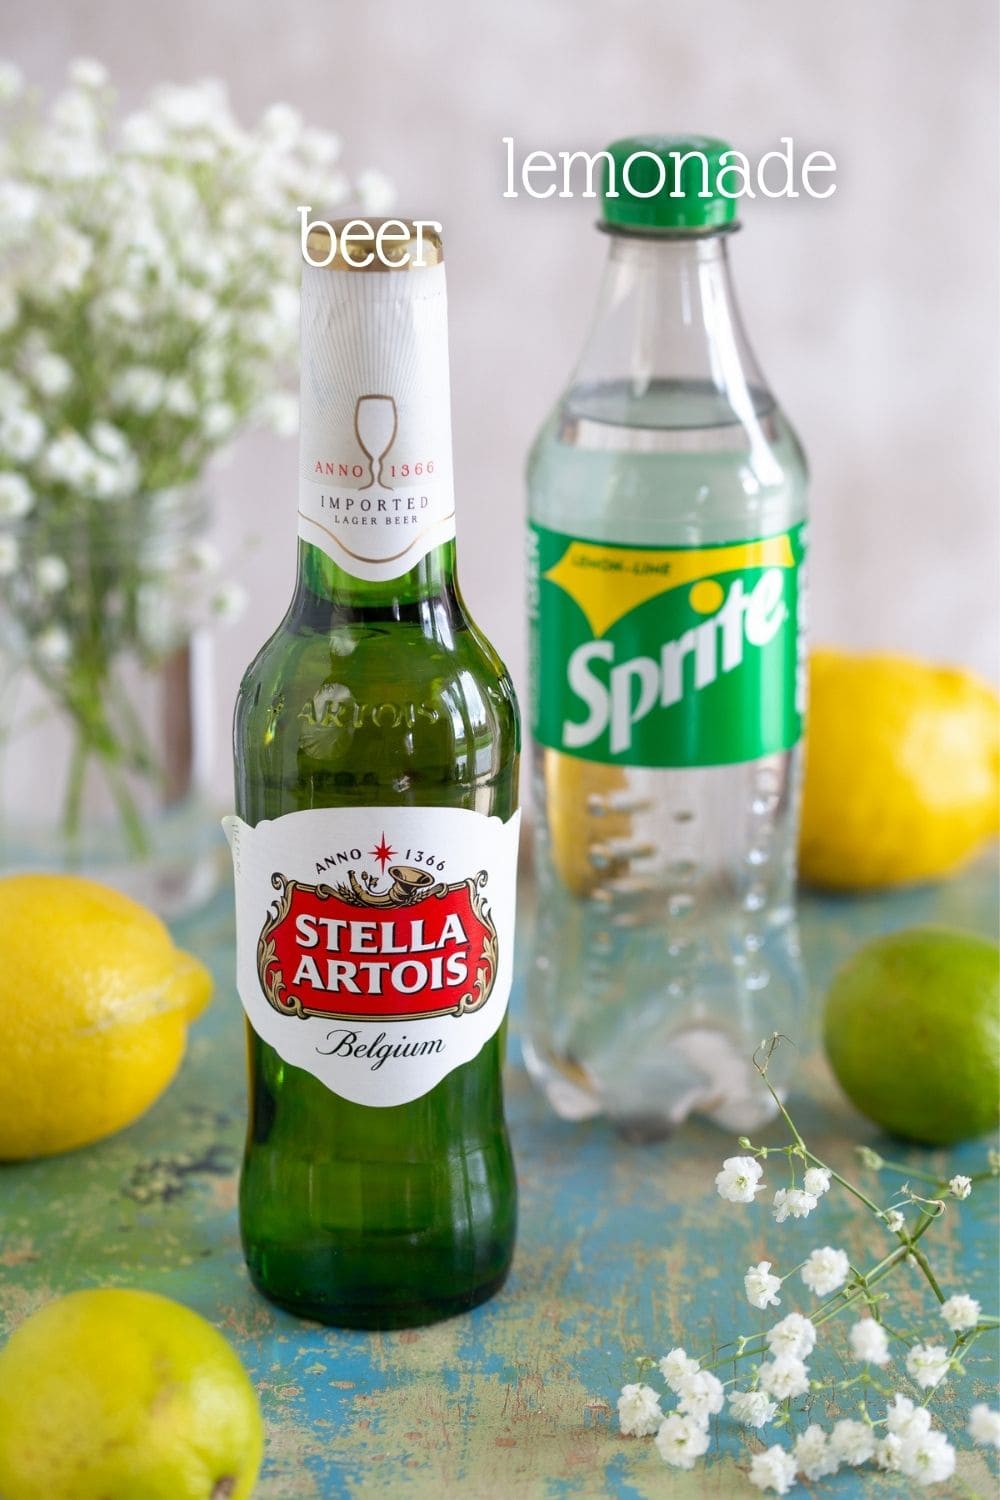 A bottle of lager beer and a bottle of Sprite lemonade.